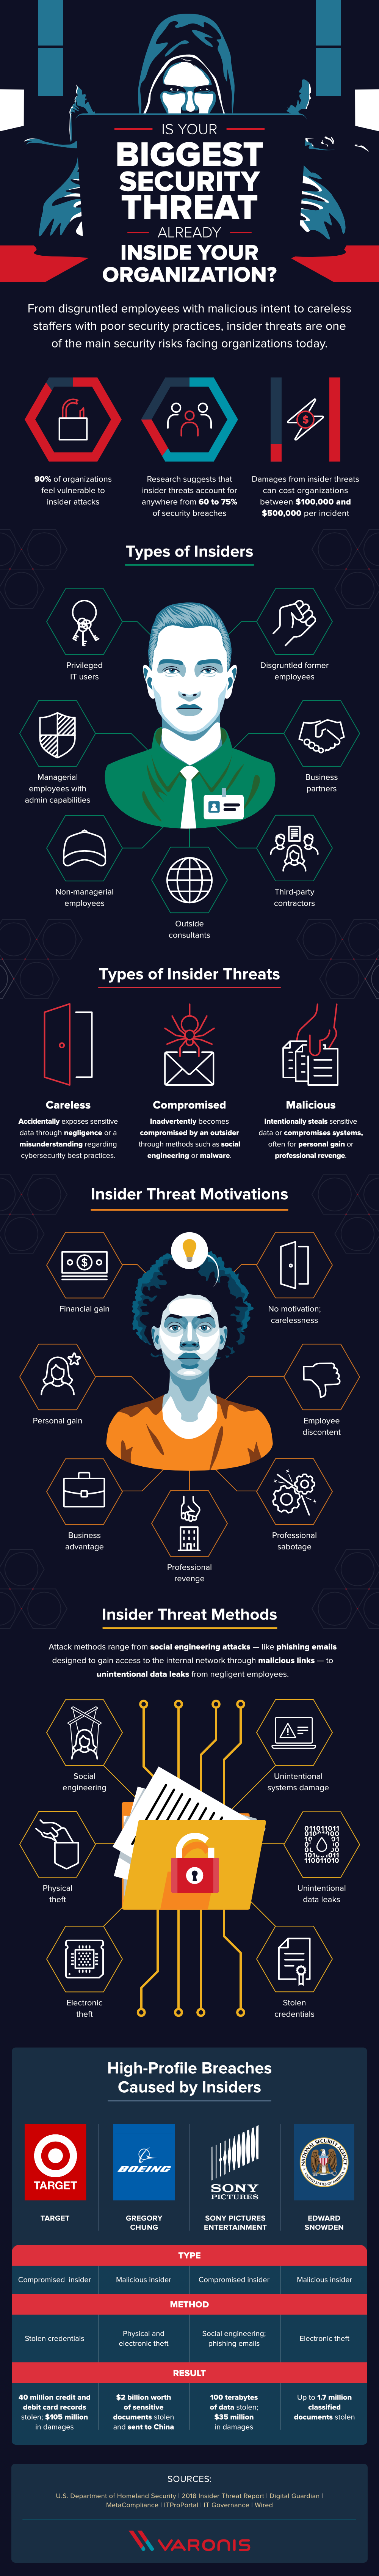 Insider threats cybersecurity